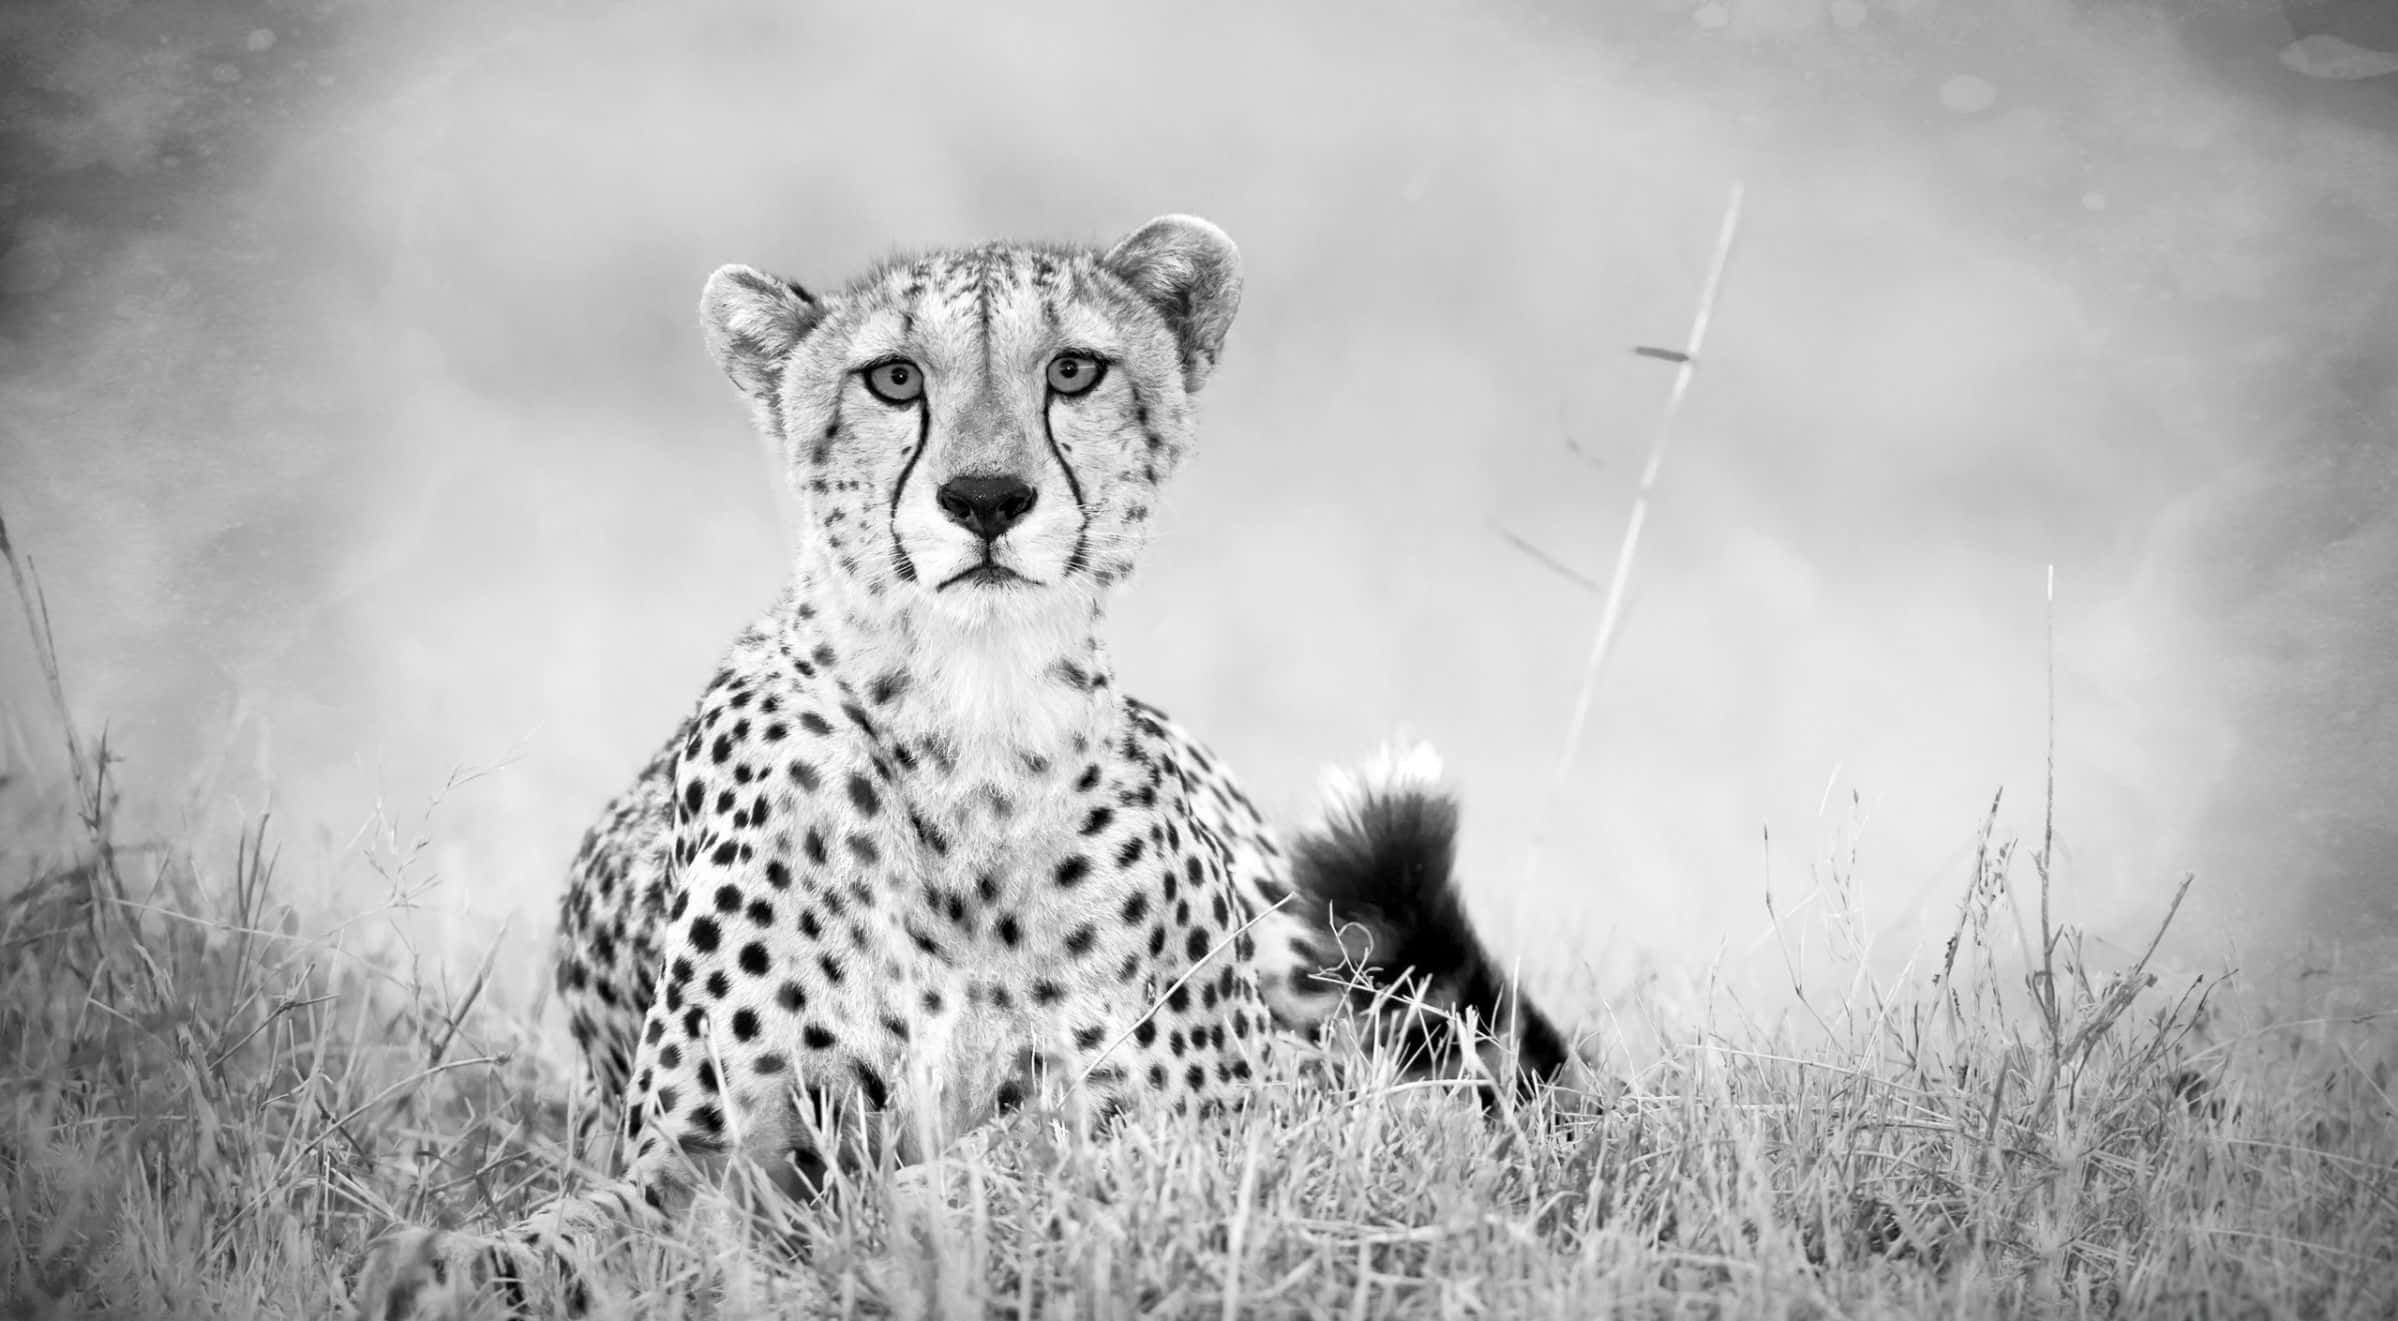 A cheetah sprinting across the vast African savannah with wild grace